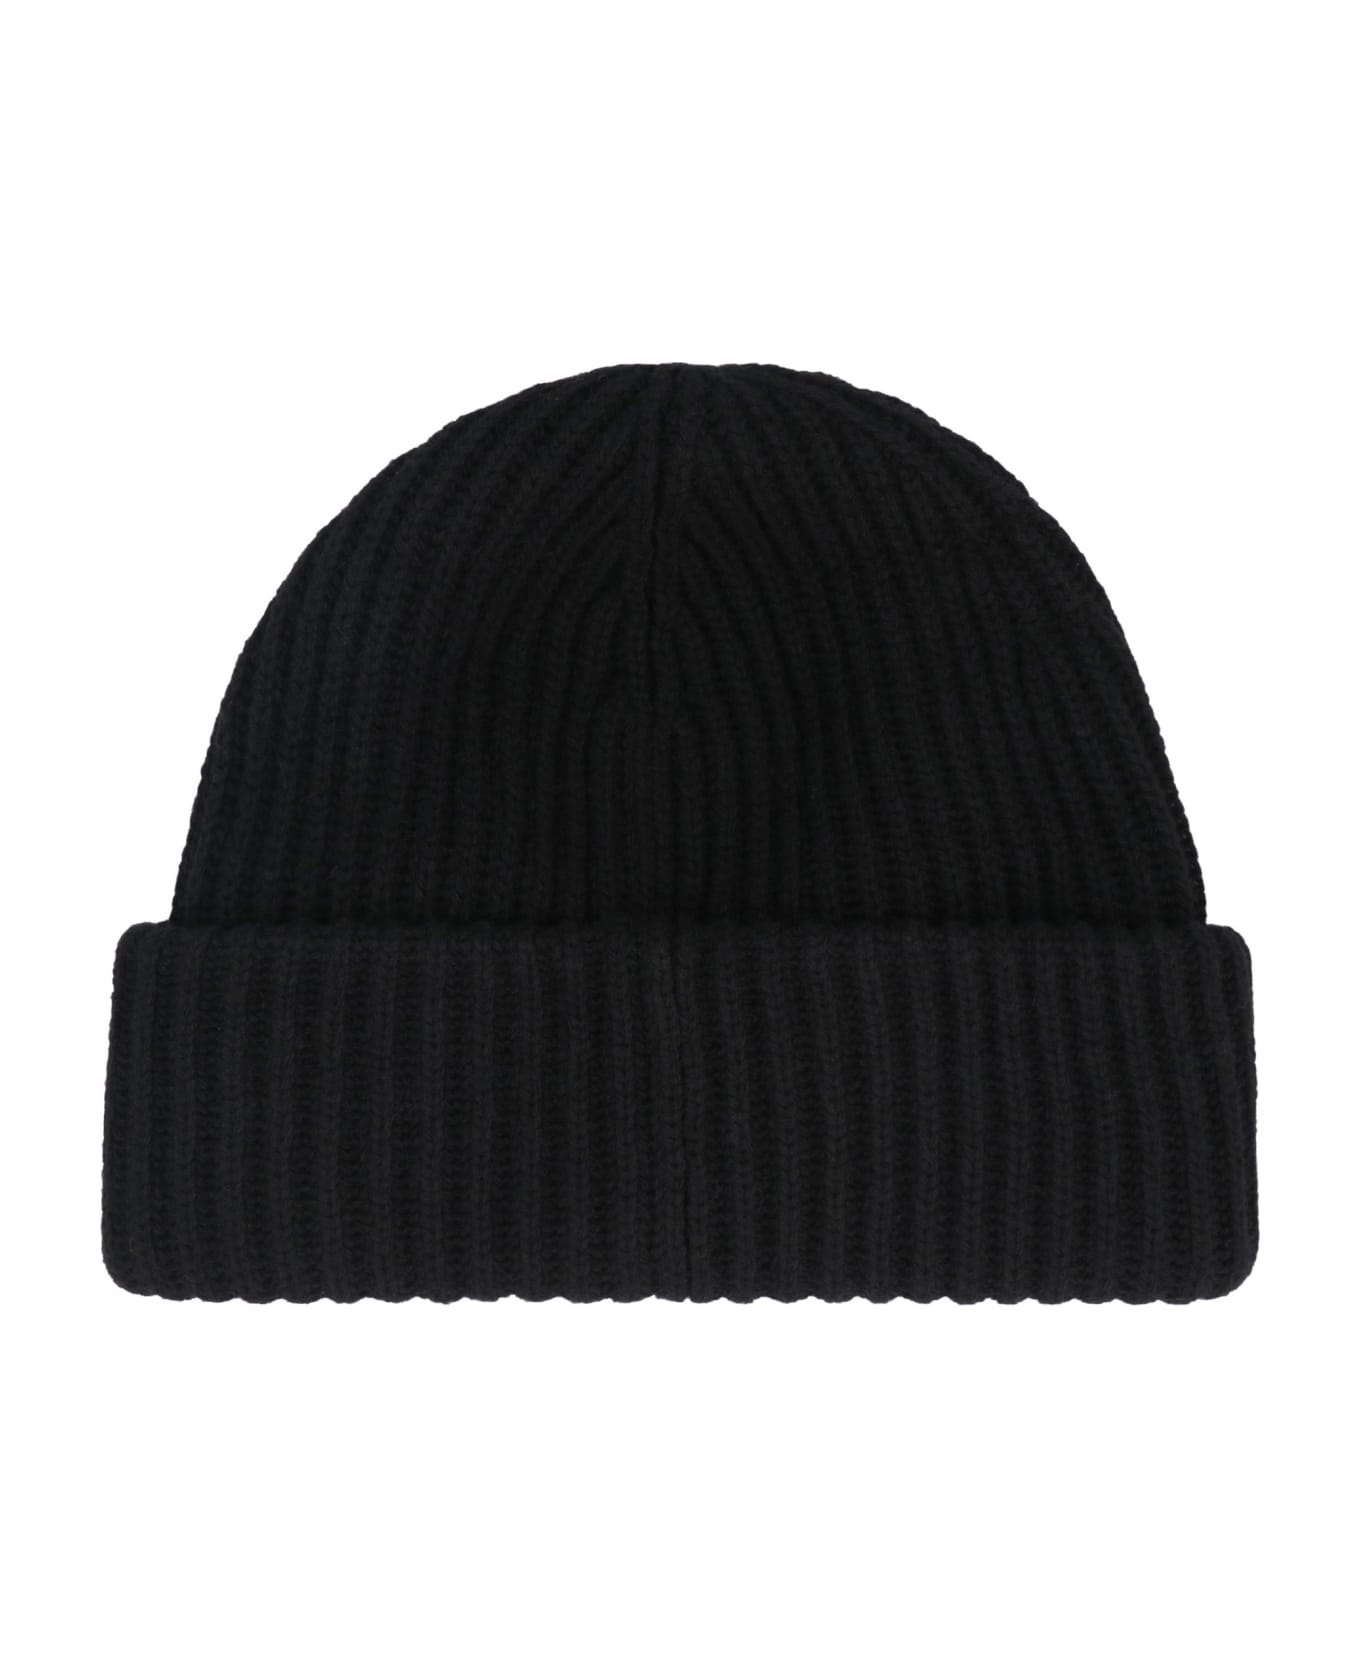 Ganni Ribbed Knit Beanie - black 帽子